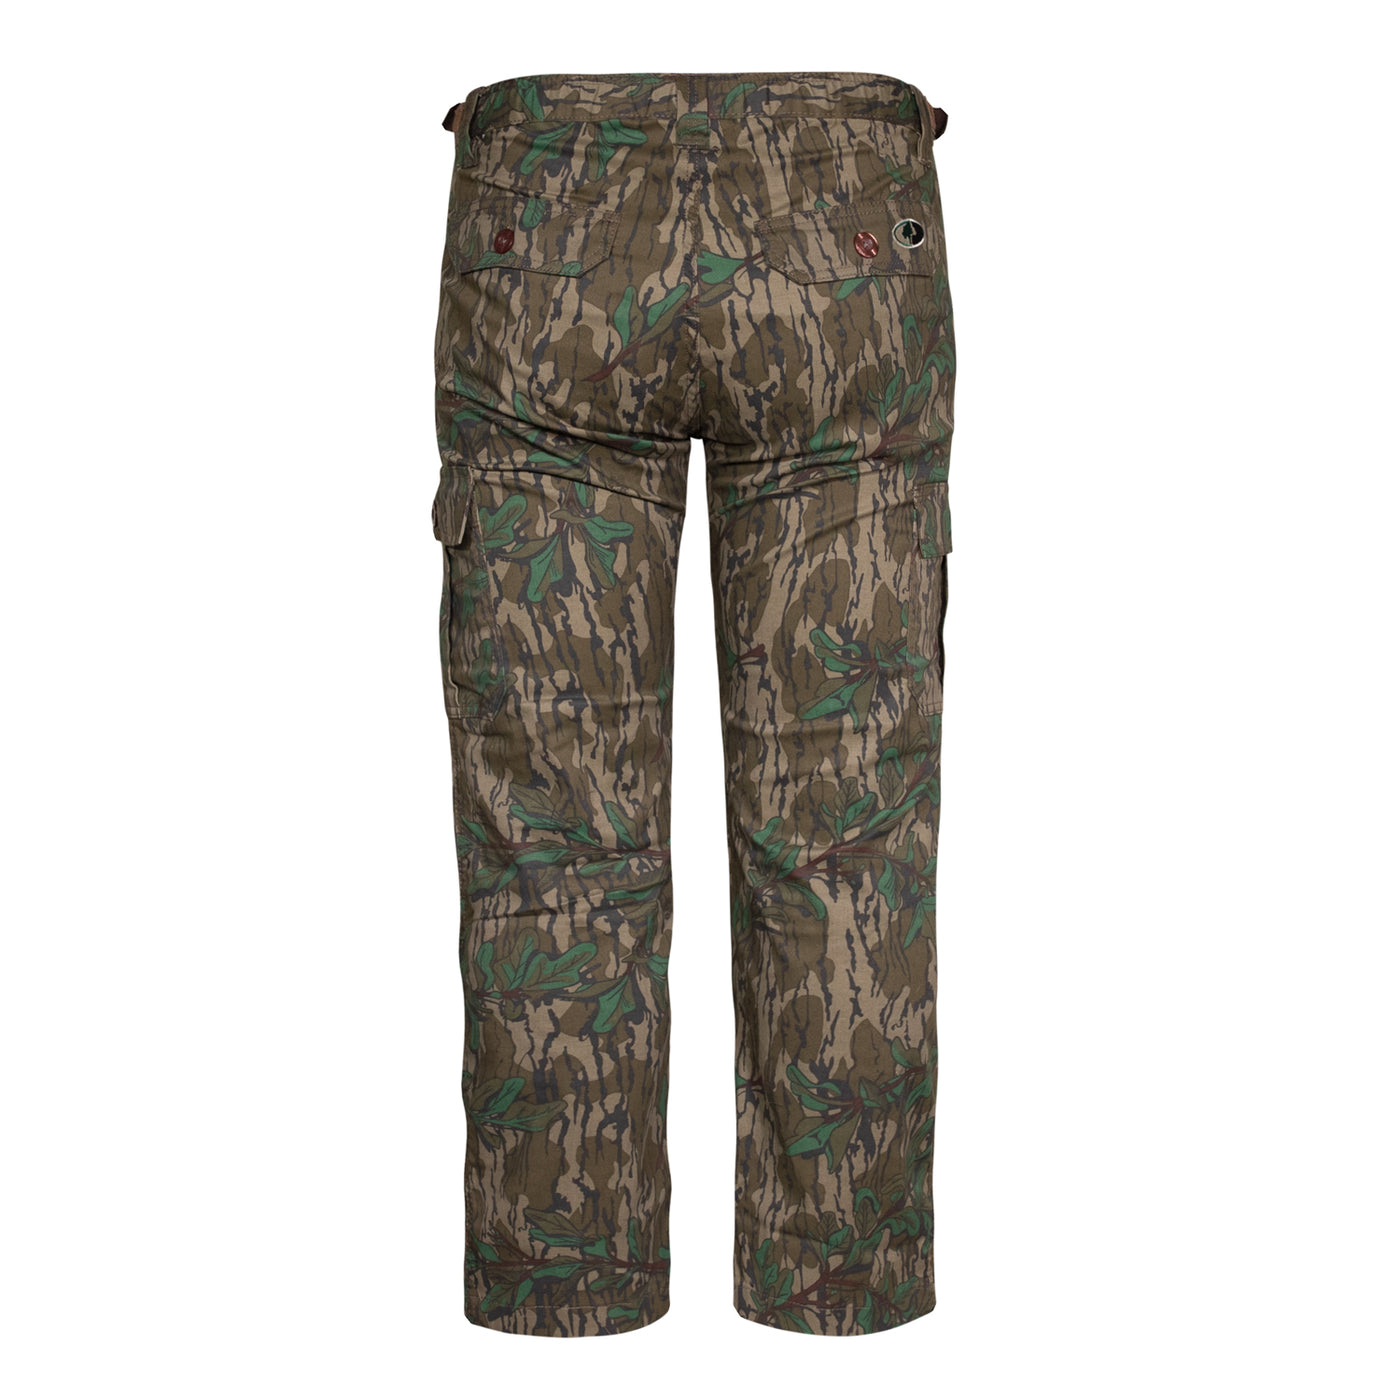 Mossy Oak Chamois Soft 3X Camo Mens Hunting Pants 48/50 Cotton